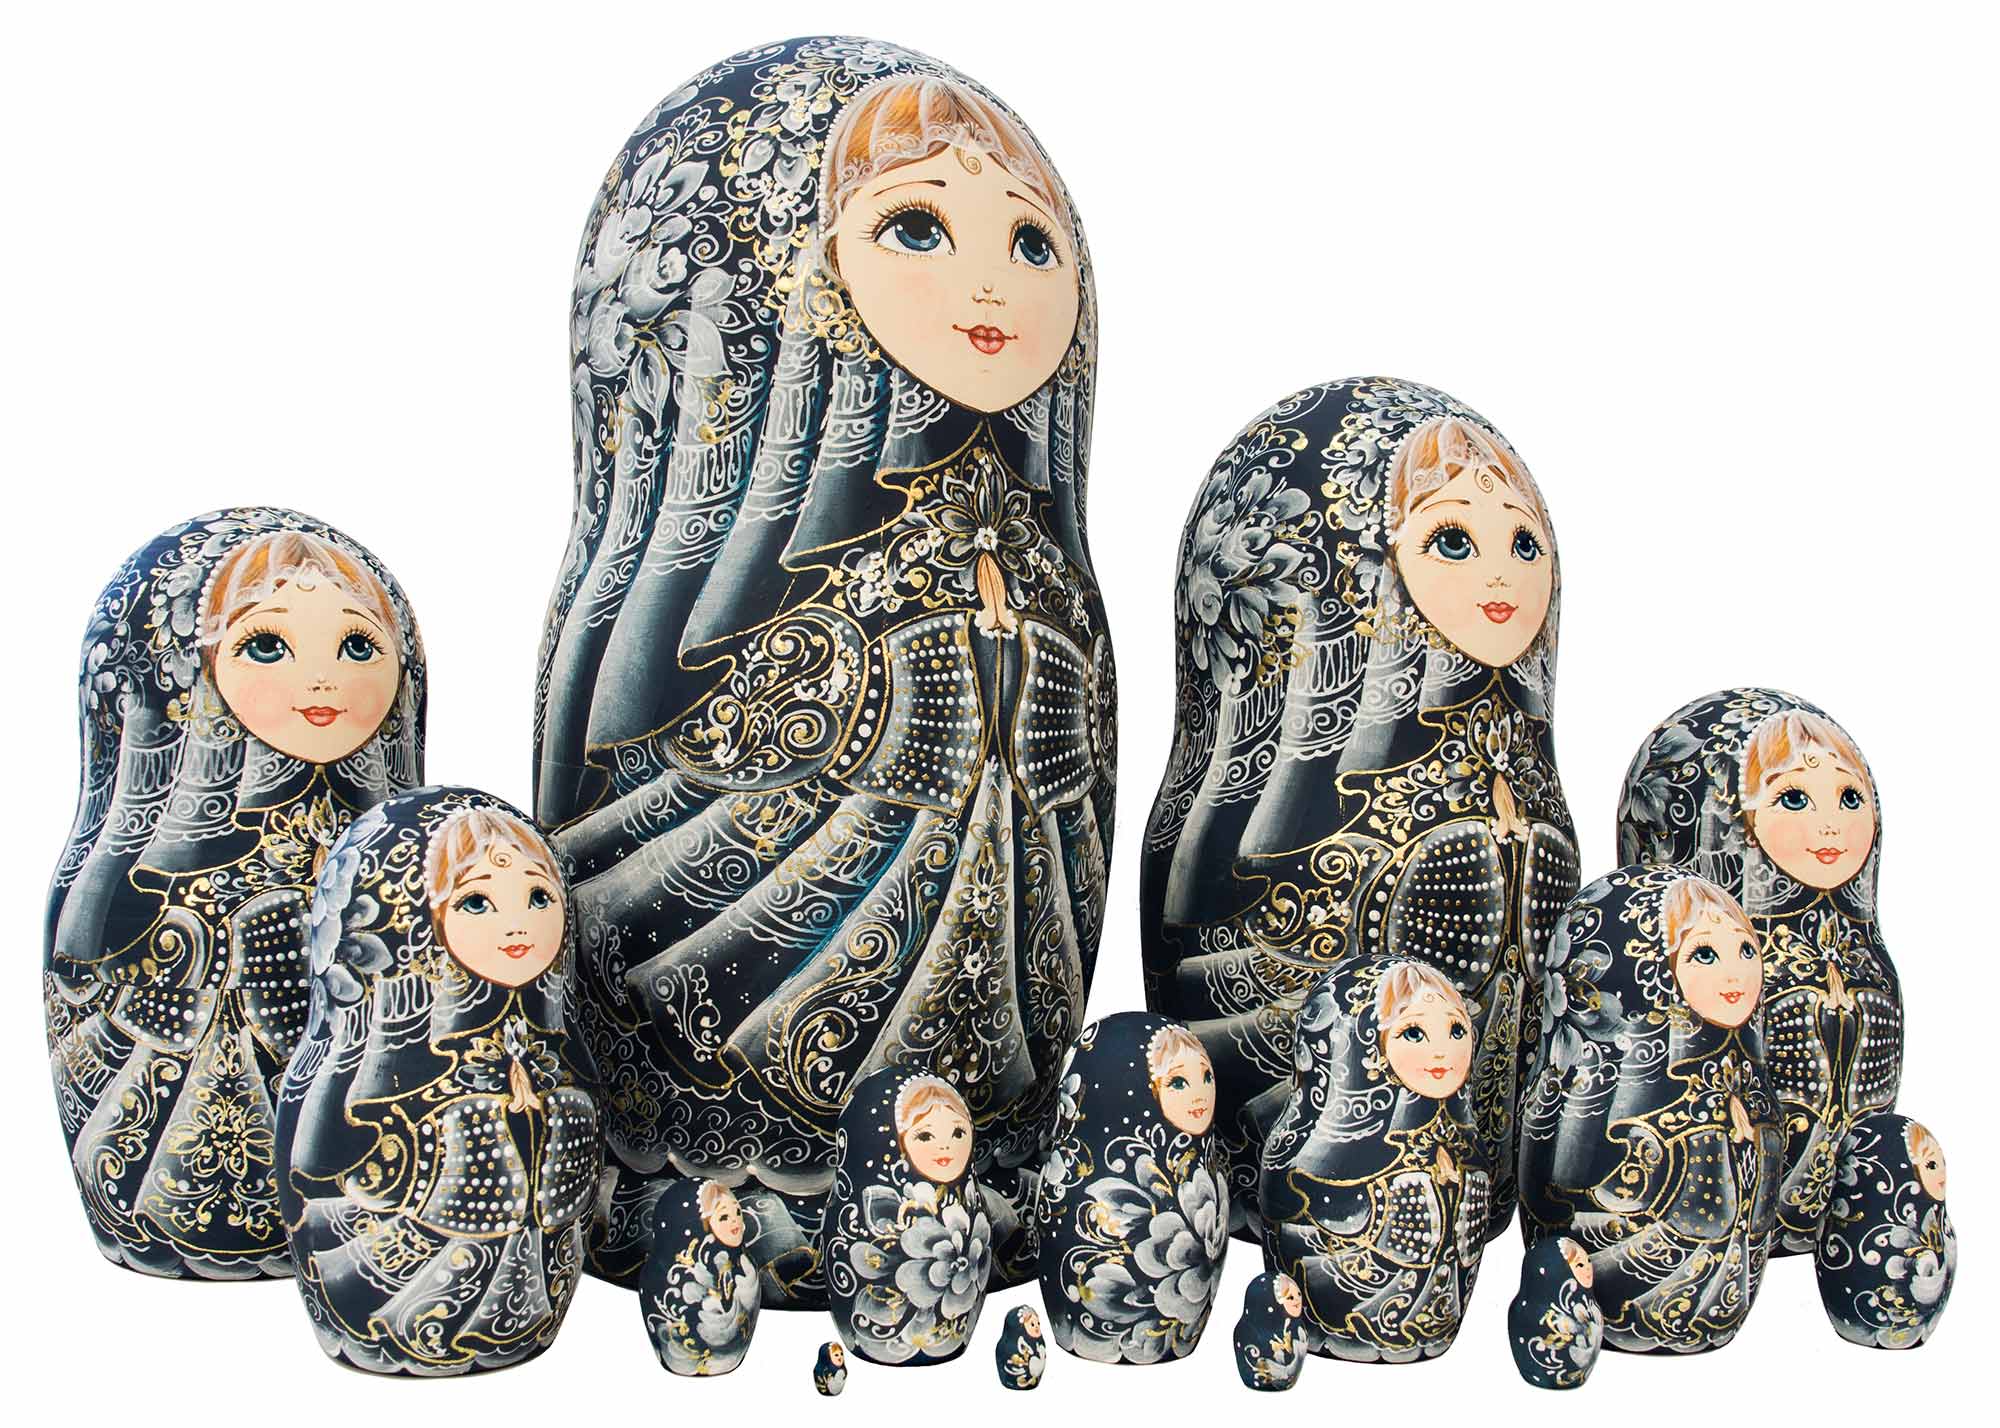 Buy Golden Lace Nesting Doll 15pc./12" at GoldenCockerel.com